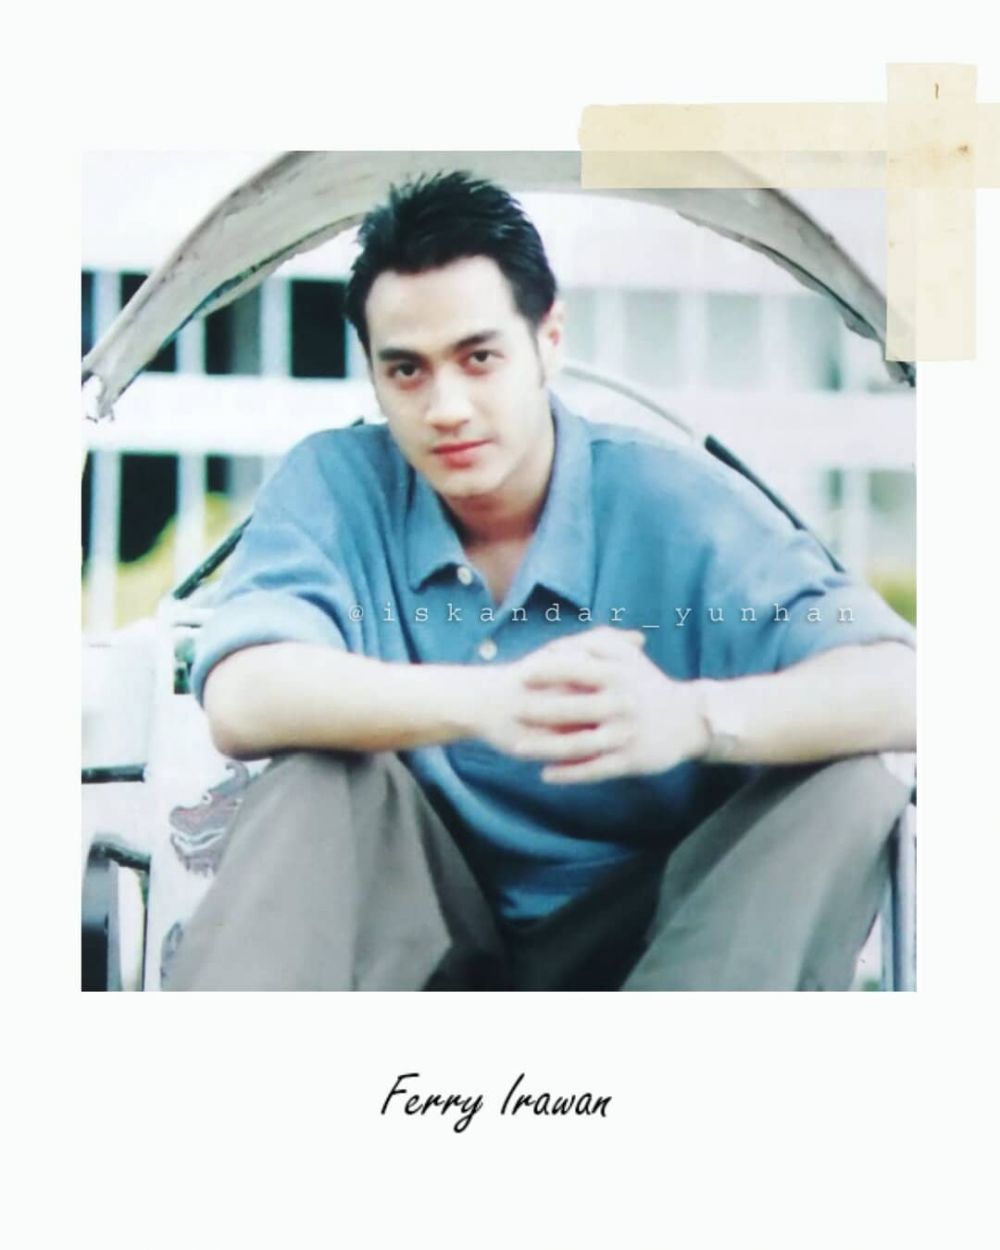 11 Potret lawas Ferry Irawan, wajahnya kerap nampang jadi model cover boy